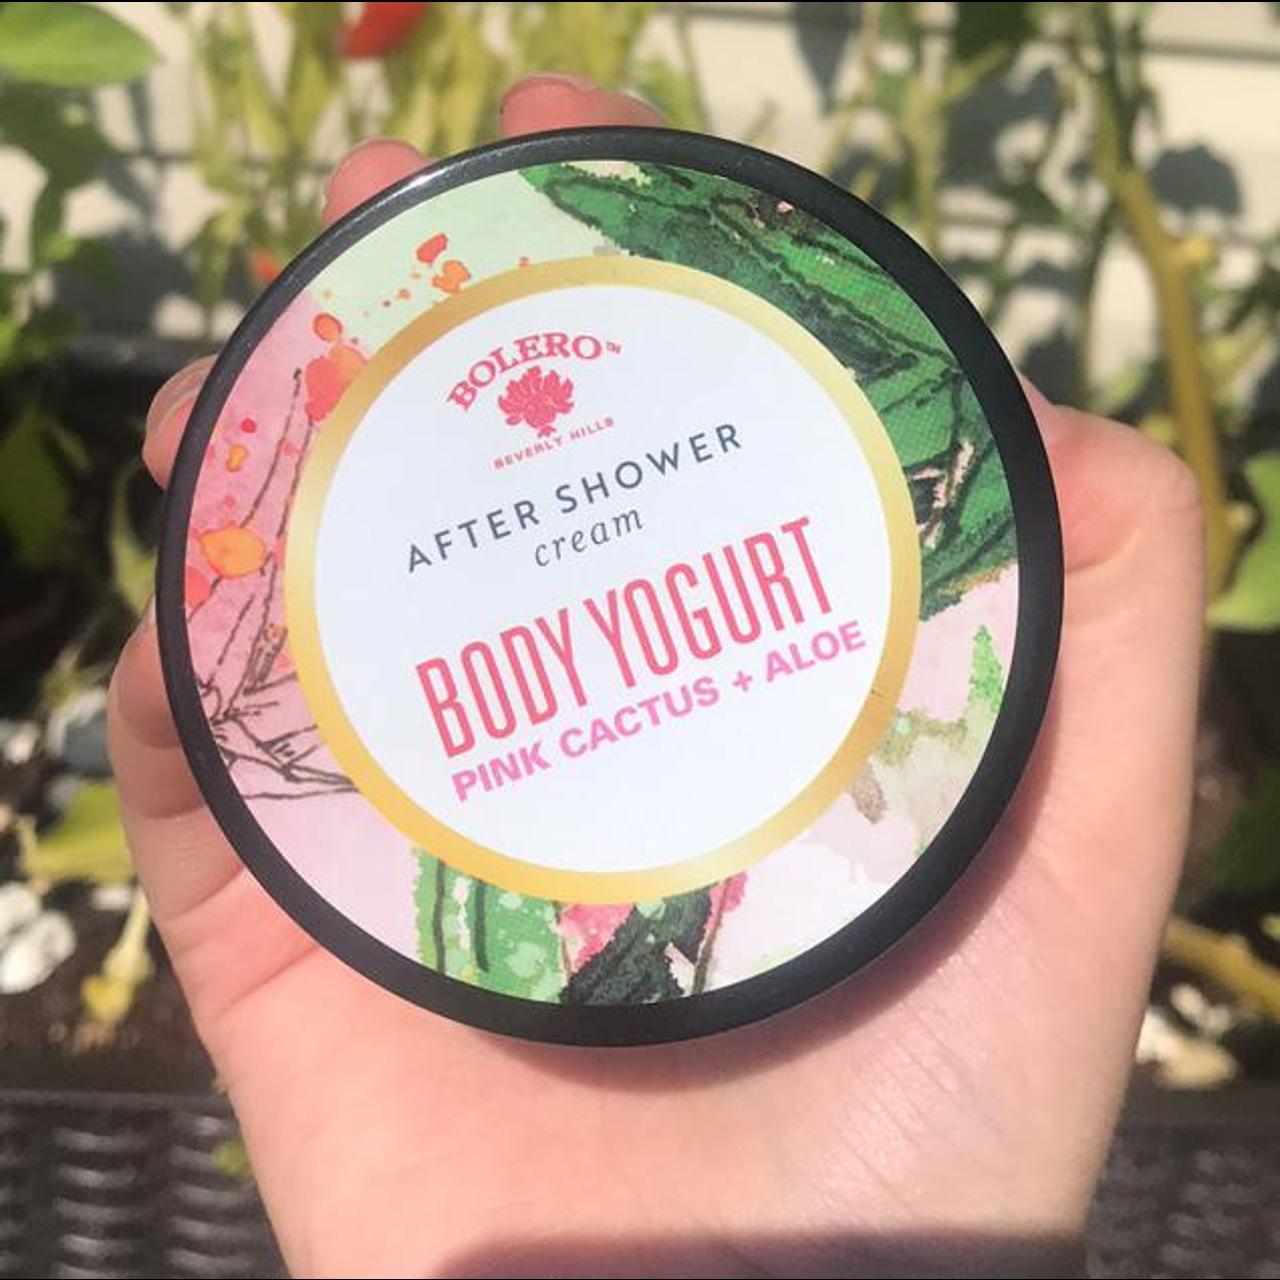 Product Image 3 - After shower body yogurt pink